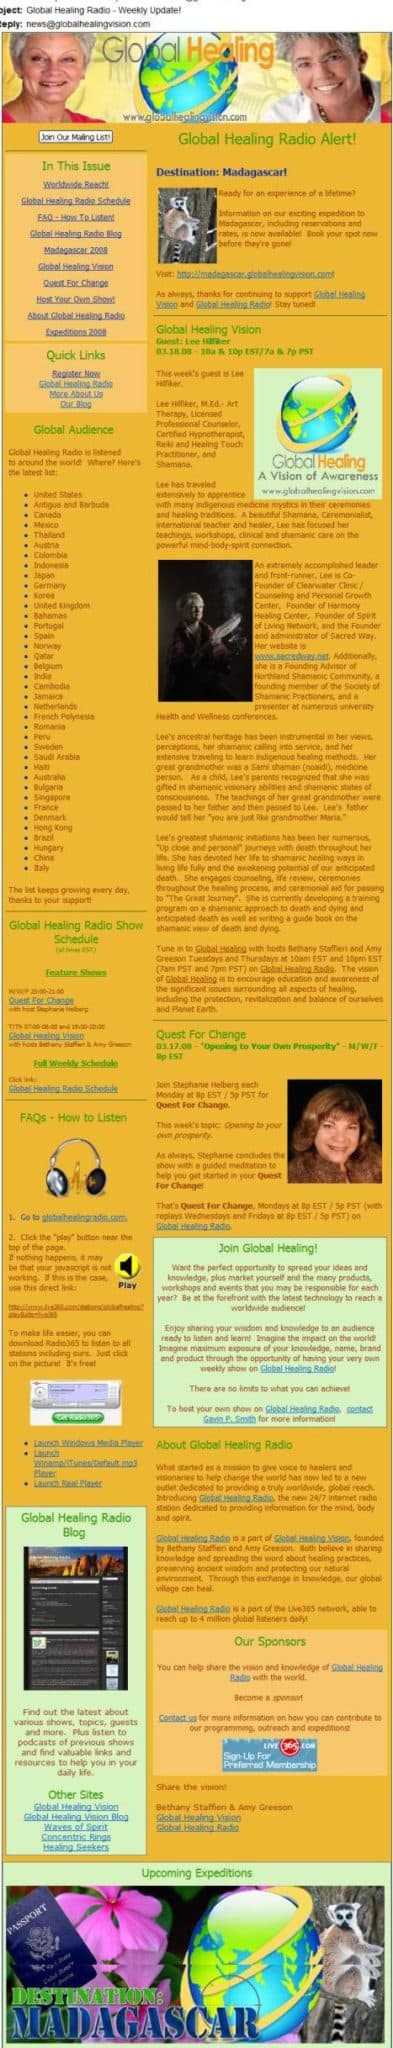 Global Healing Vision Newsletter Sample